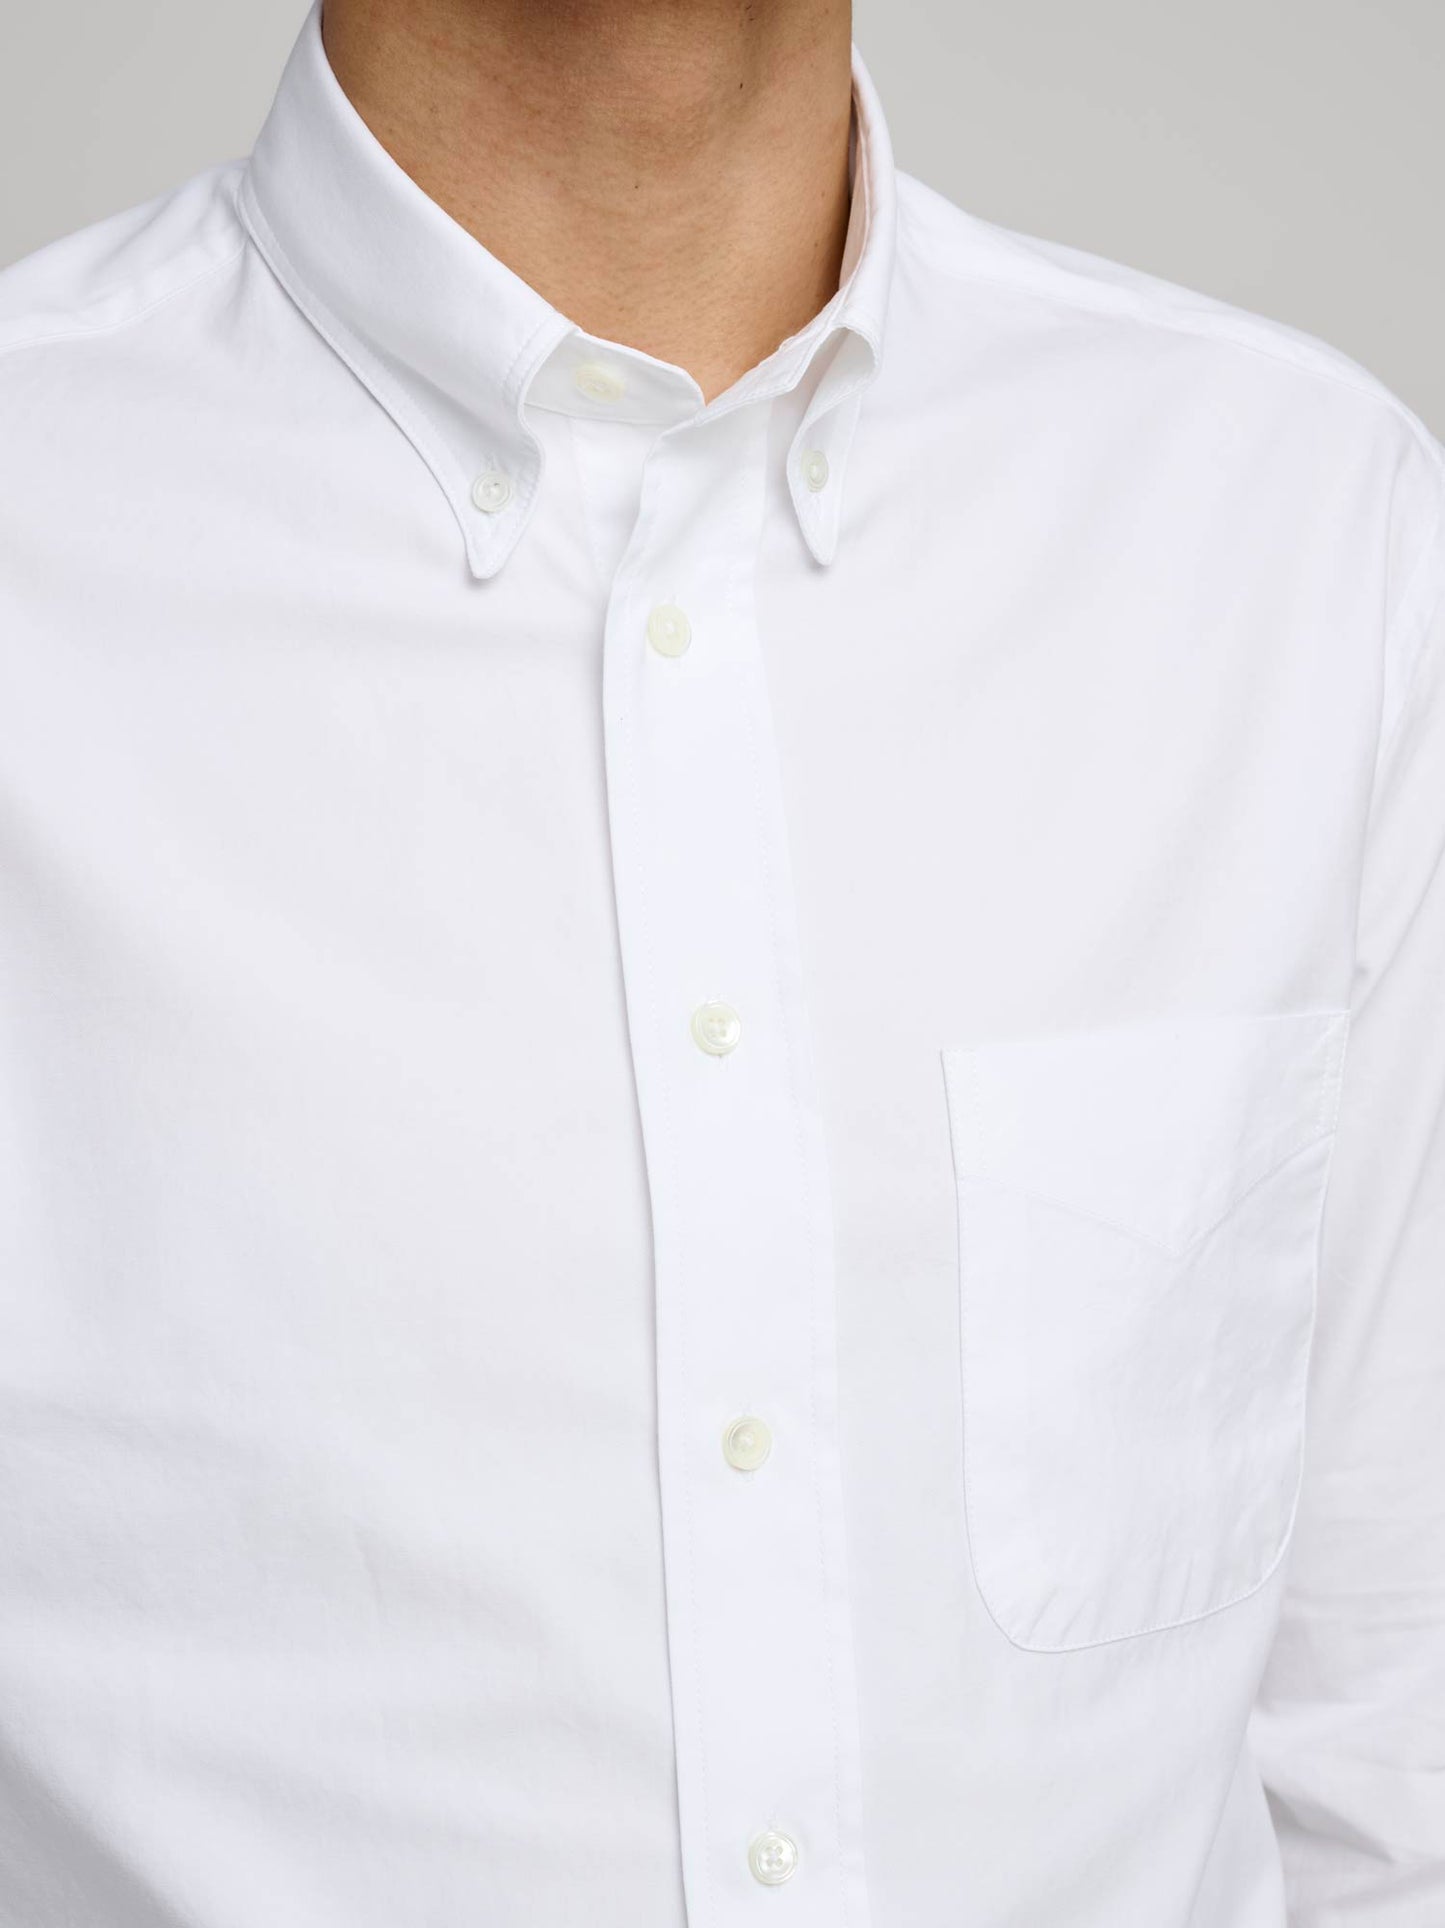 American BD Shirt Lightweight Twill, White